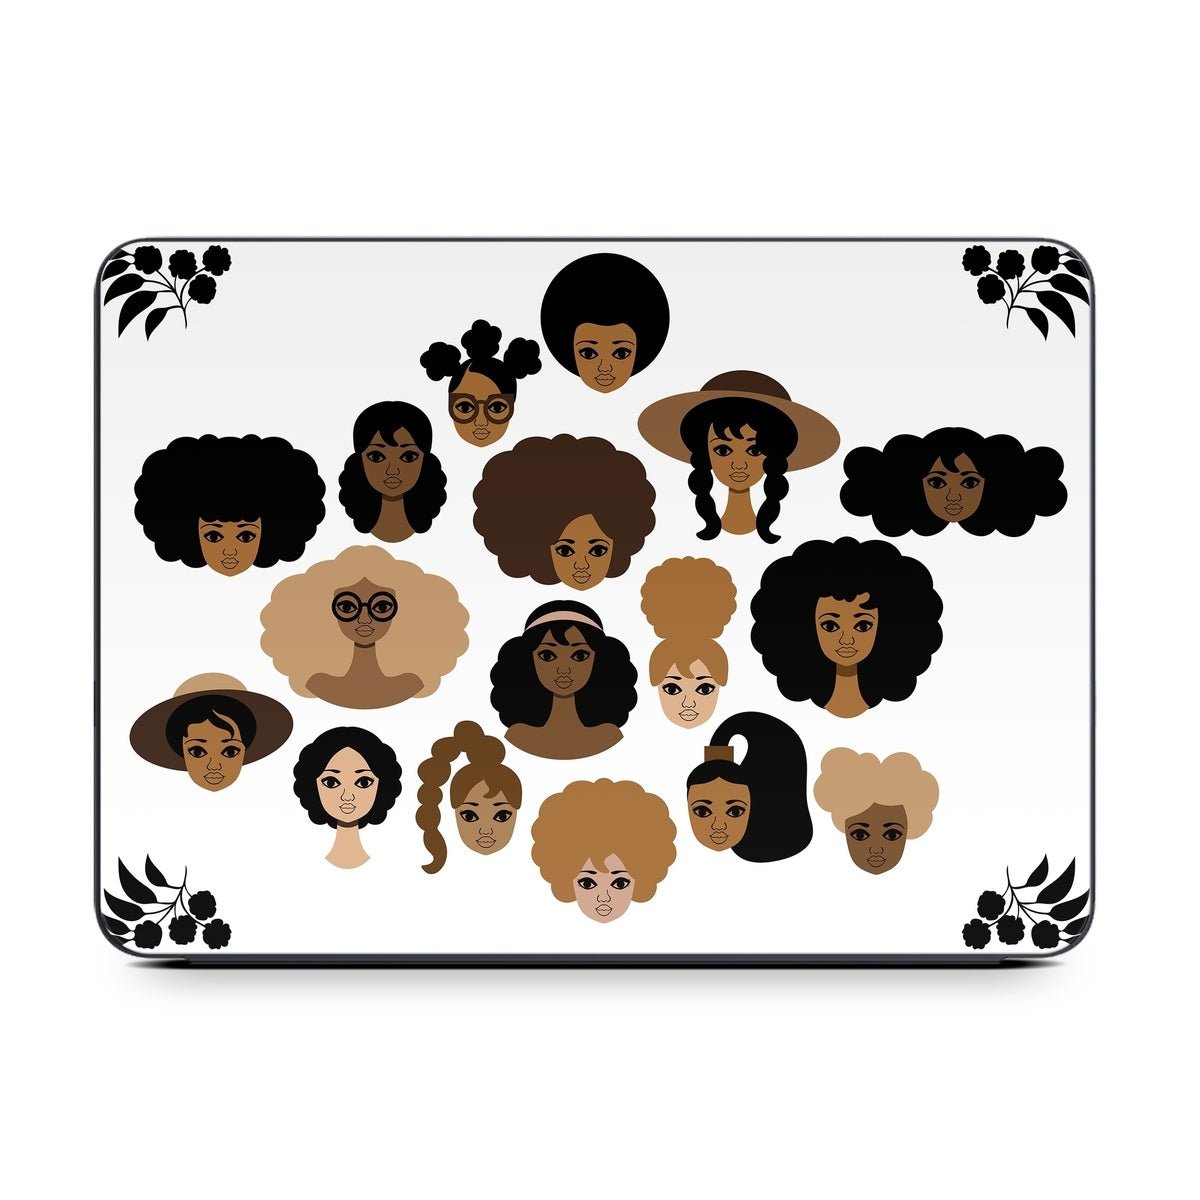 All My Sisters - Apple Smart Keyboard Folio Skin - Tabitha Brown - DecalGirl